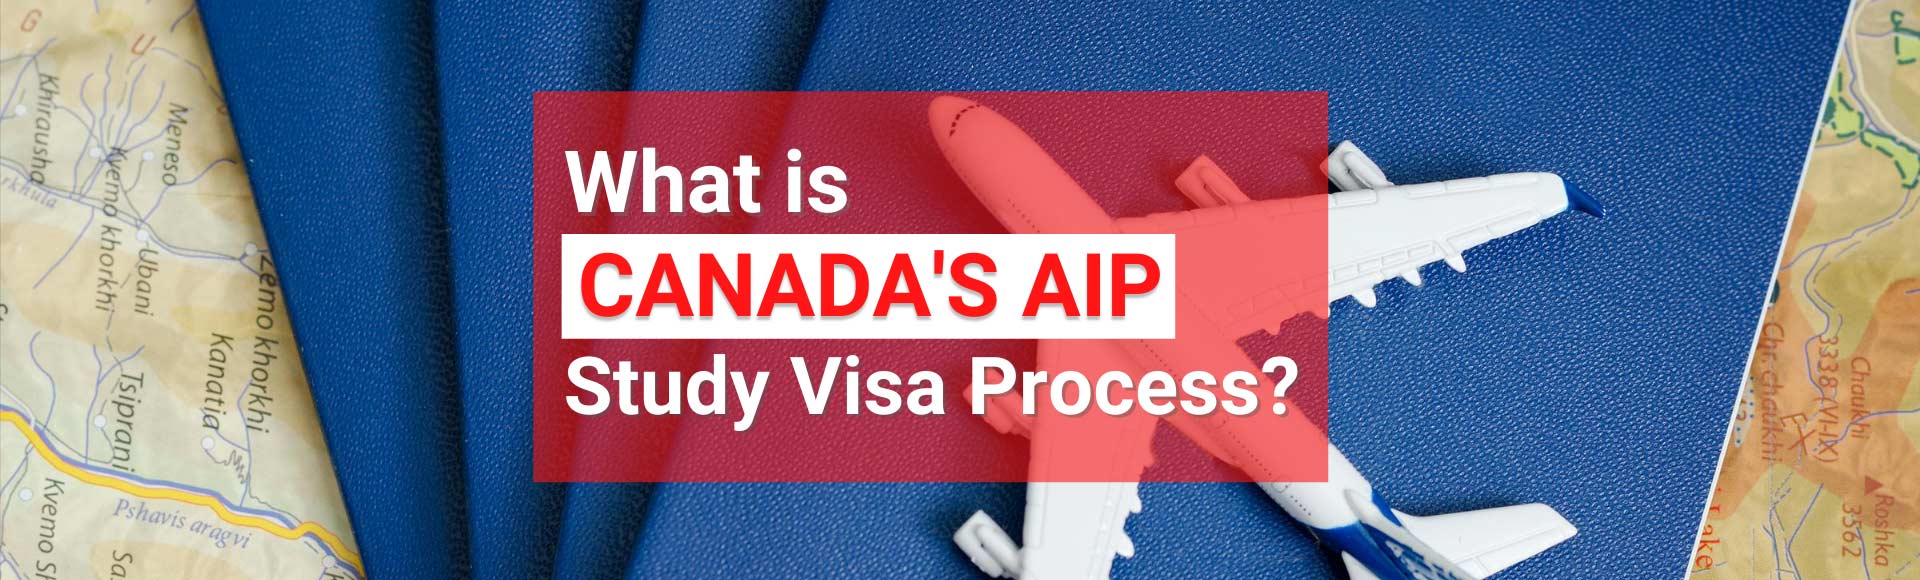 Canada's AIP Study Visa Process